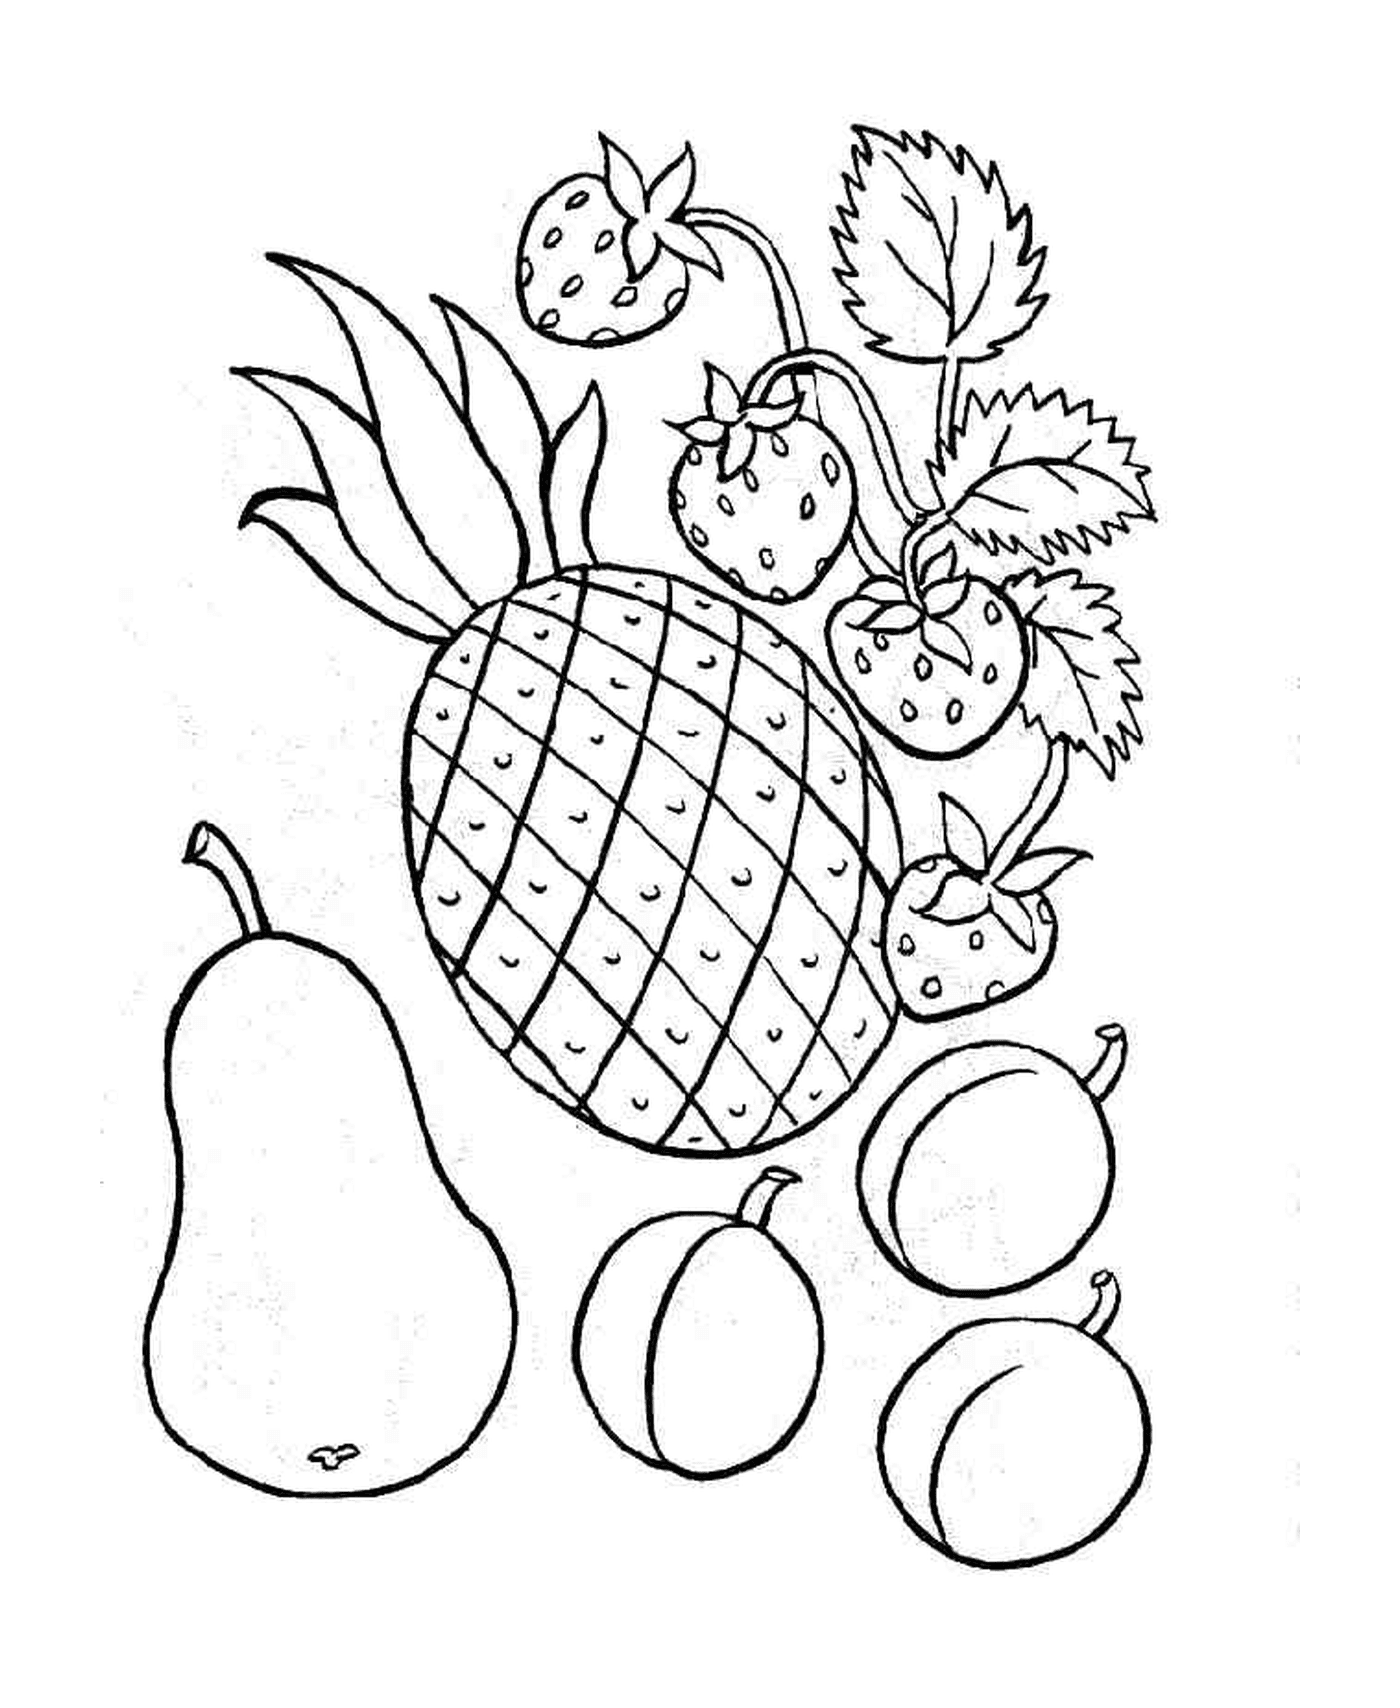   ananas et autres fruits 